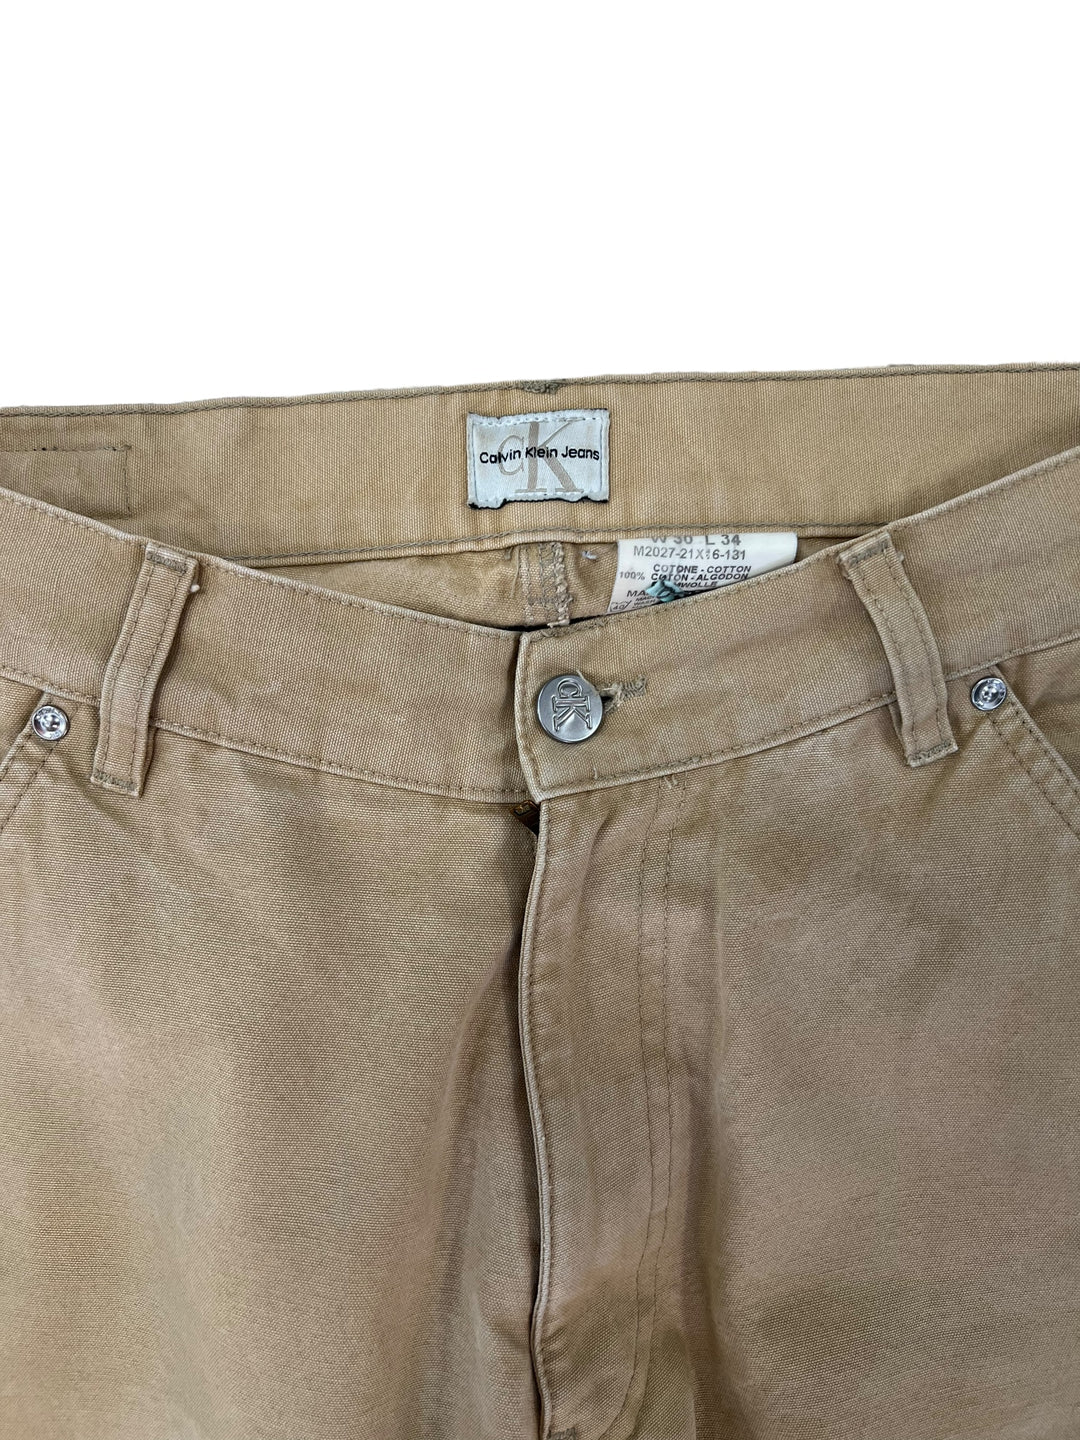 Calvin Klein vintage jeans men’s small W30 L34